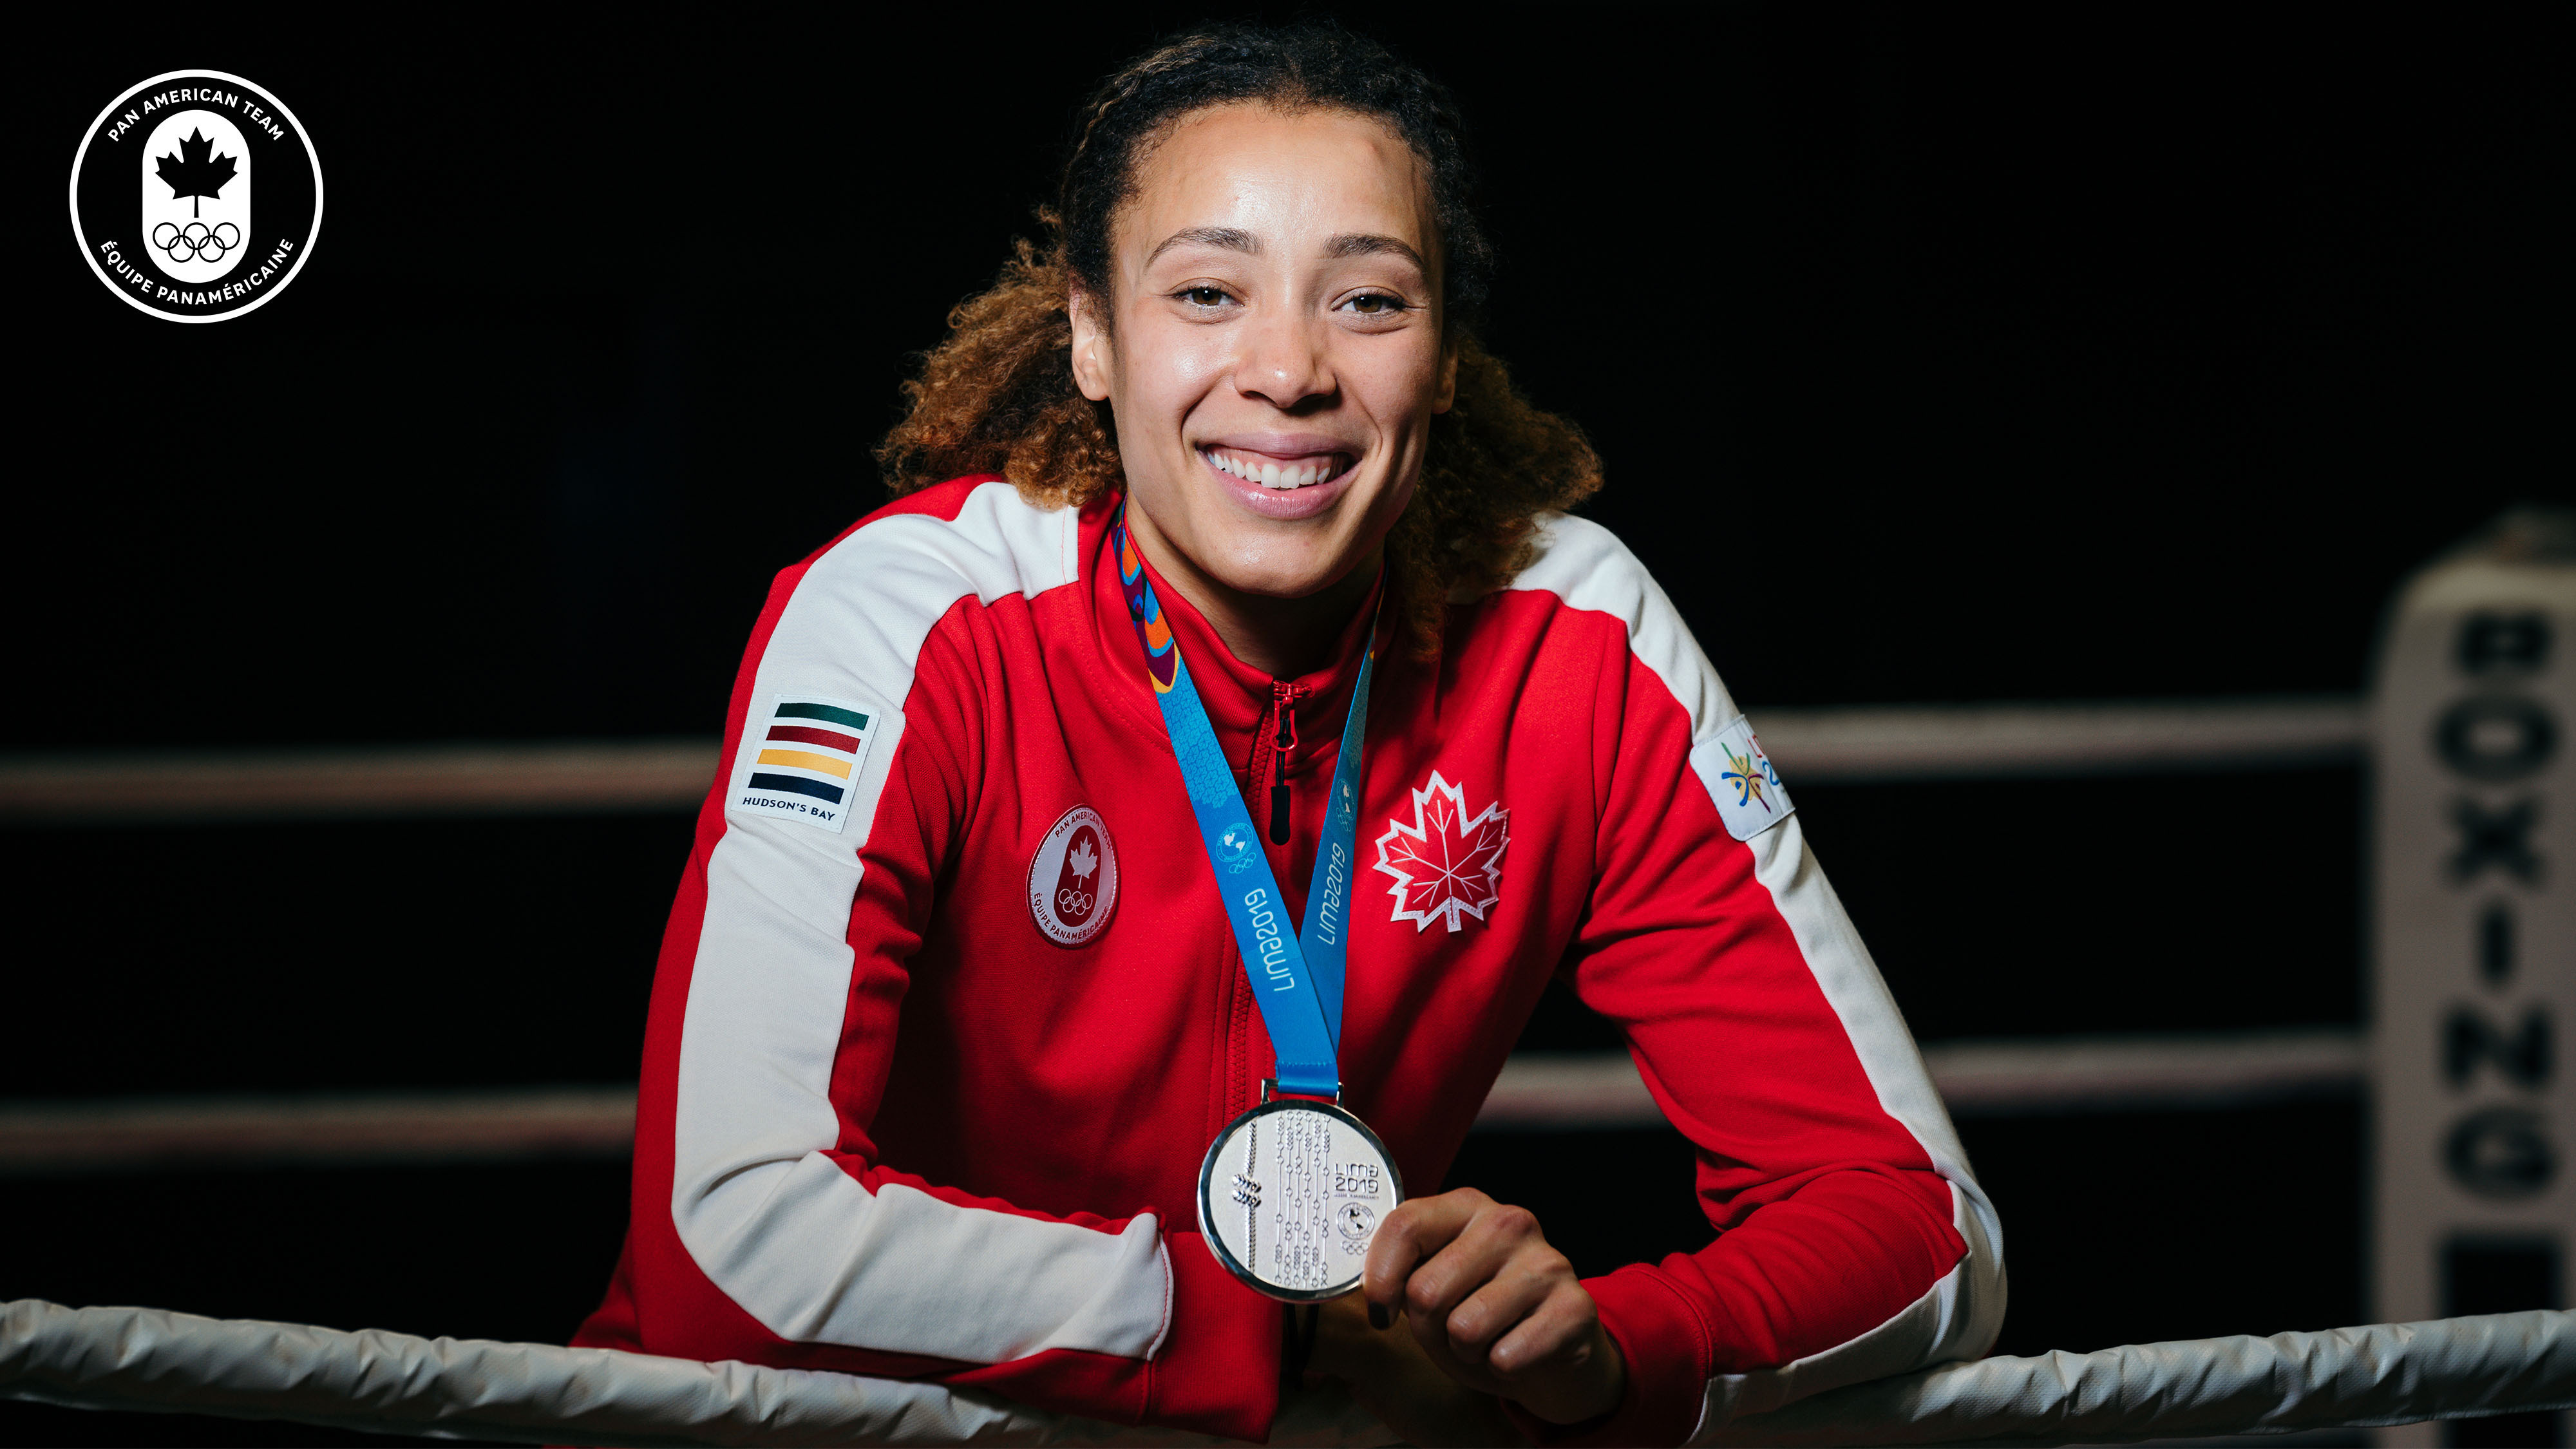 Tammara Thibeault wears silver medal